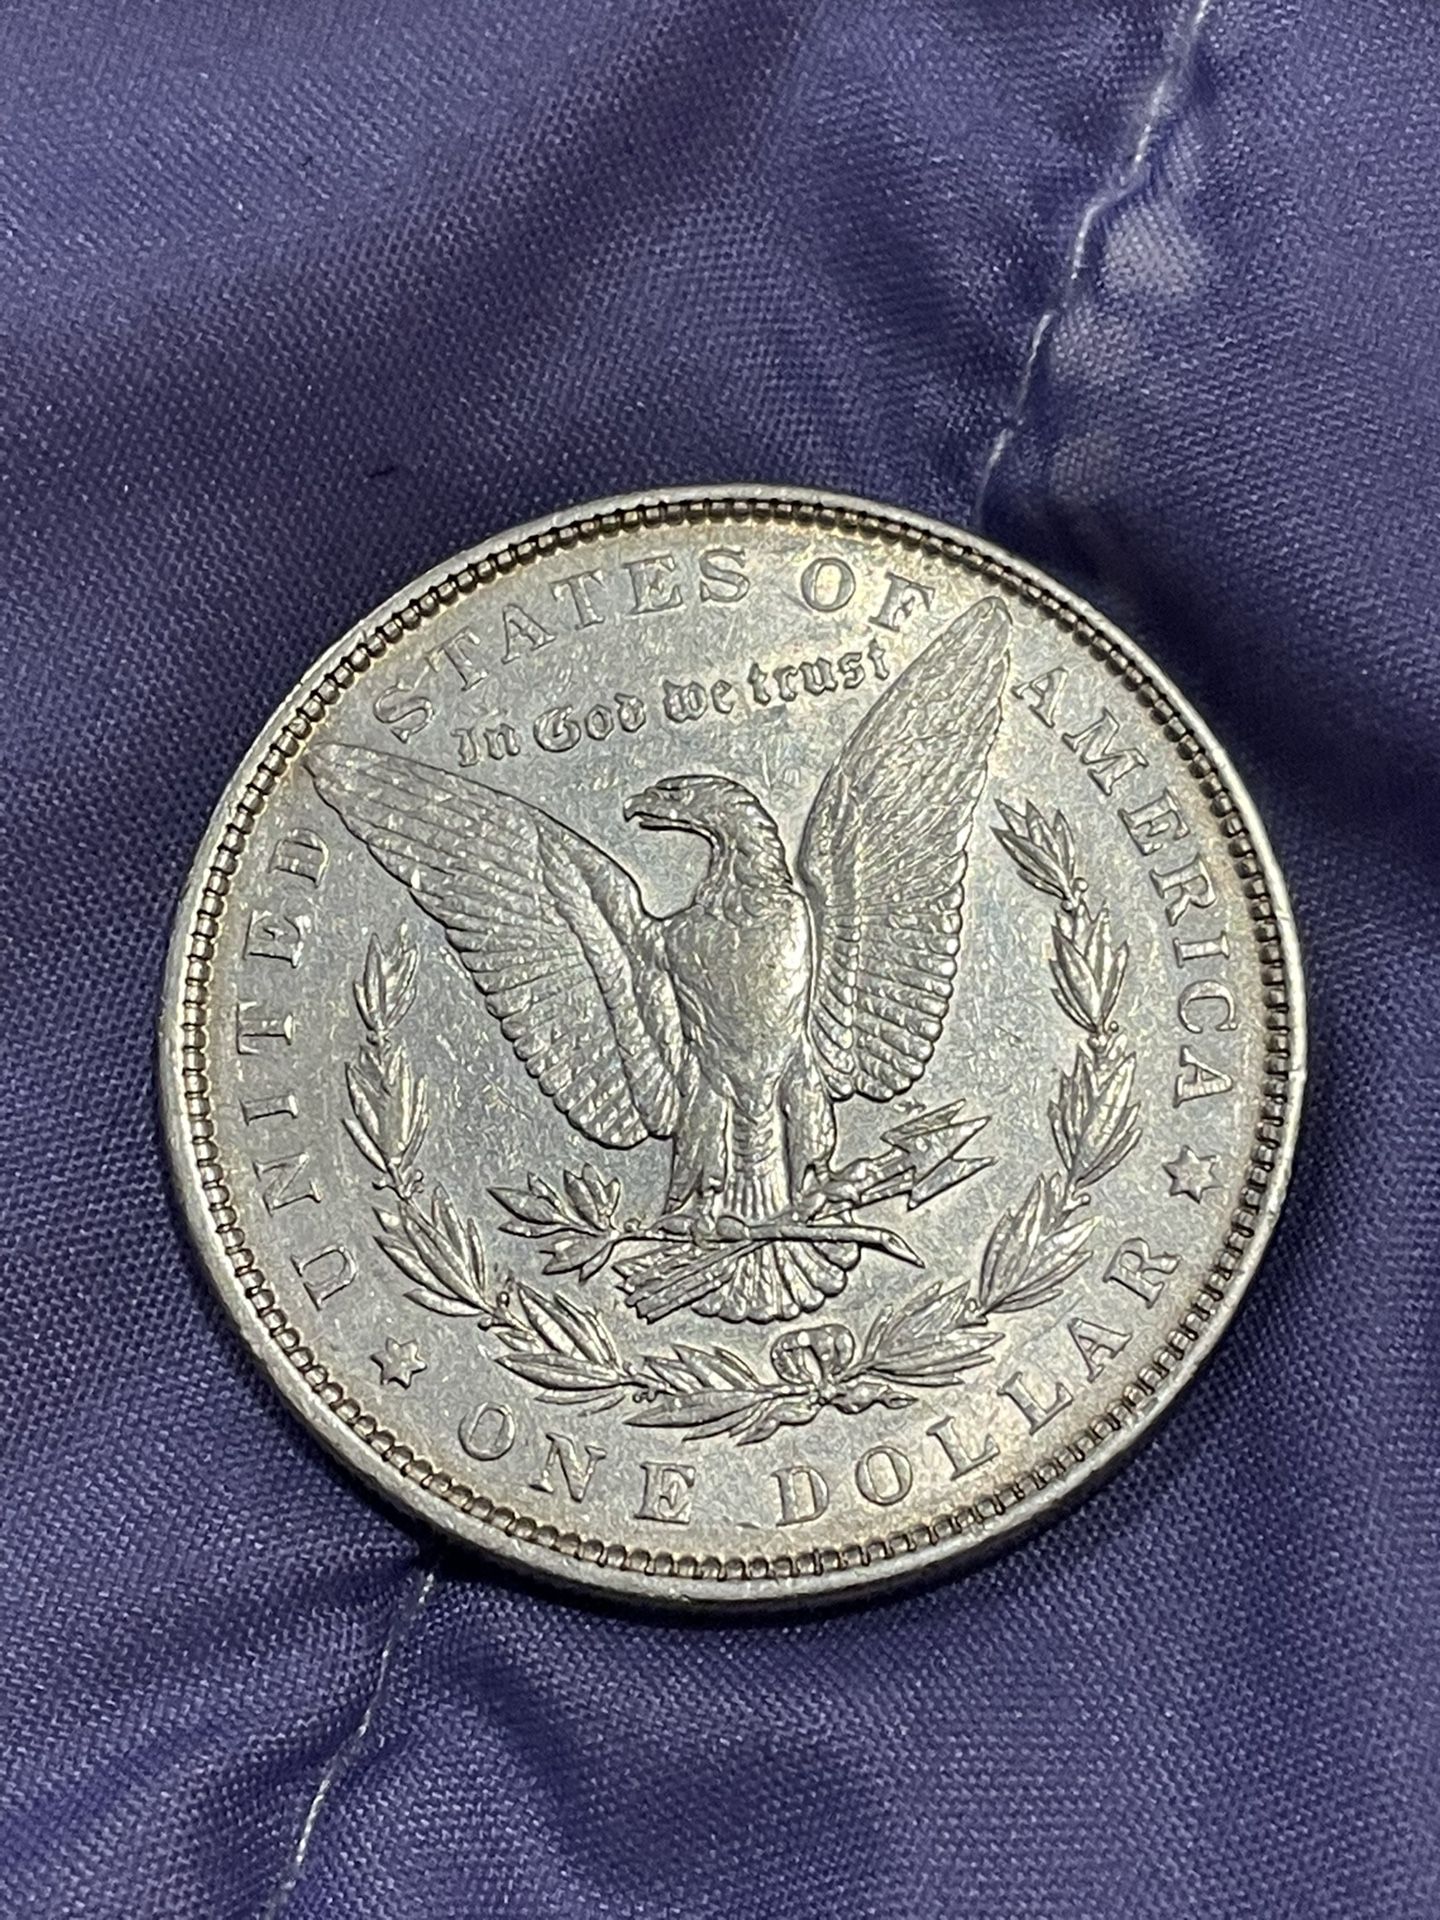 1886 Morgan Silver Dollar 